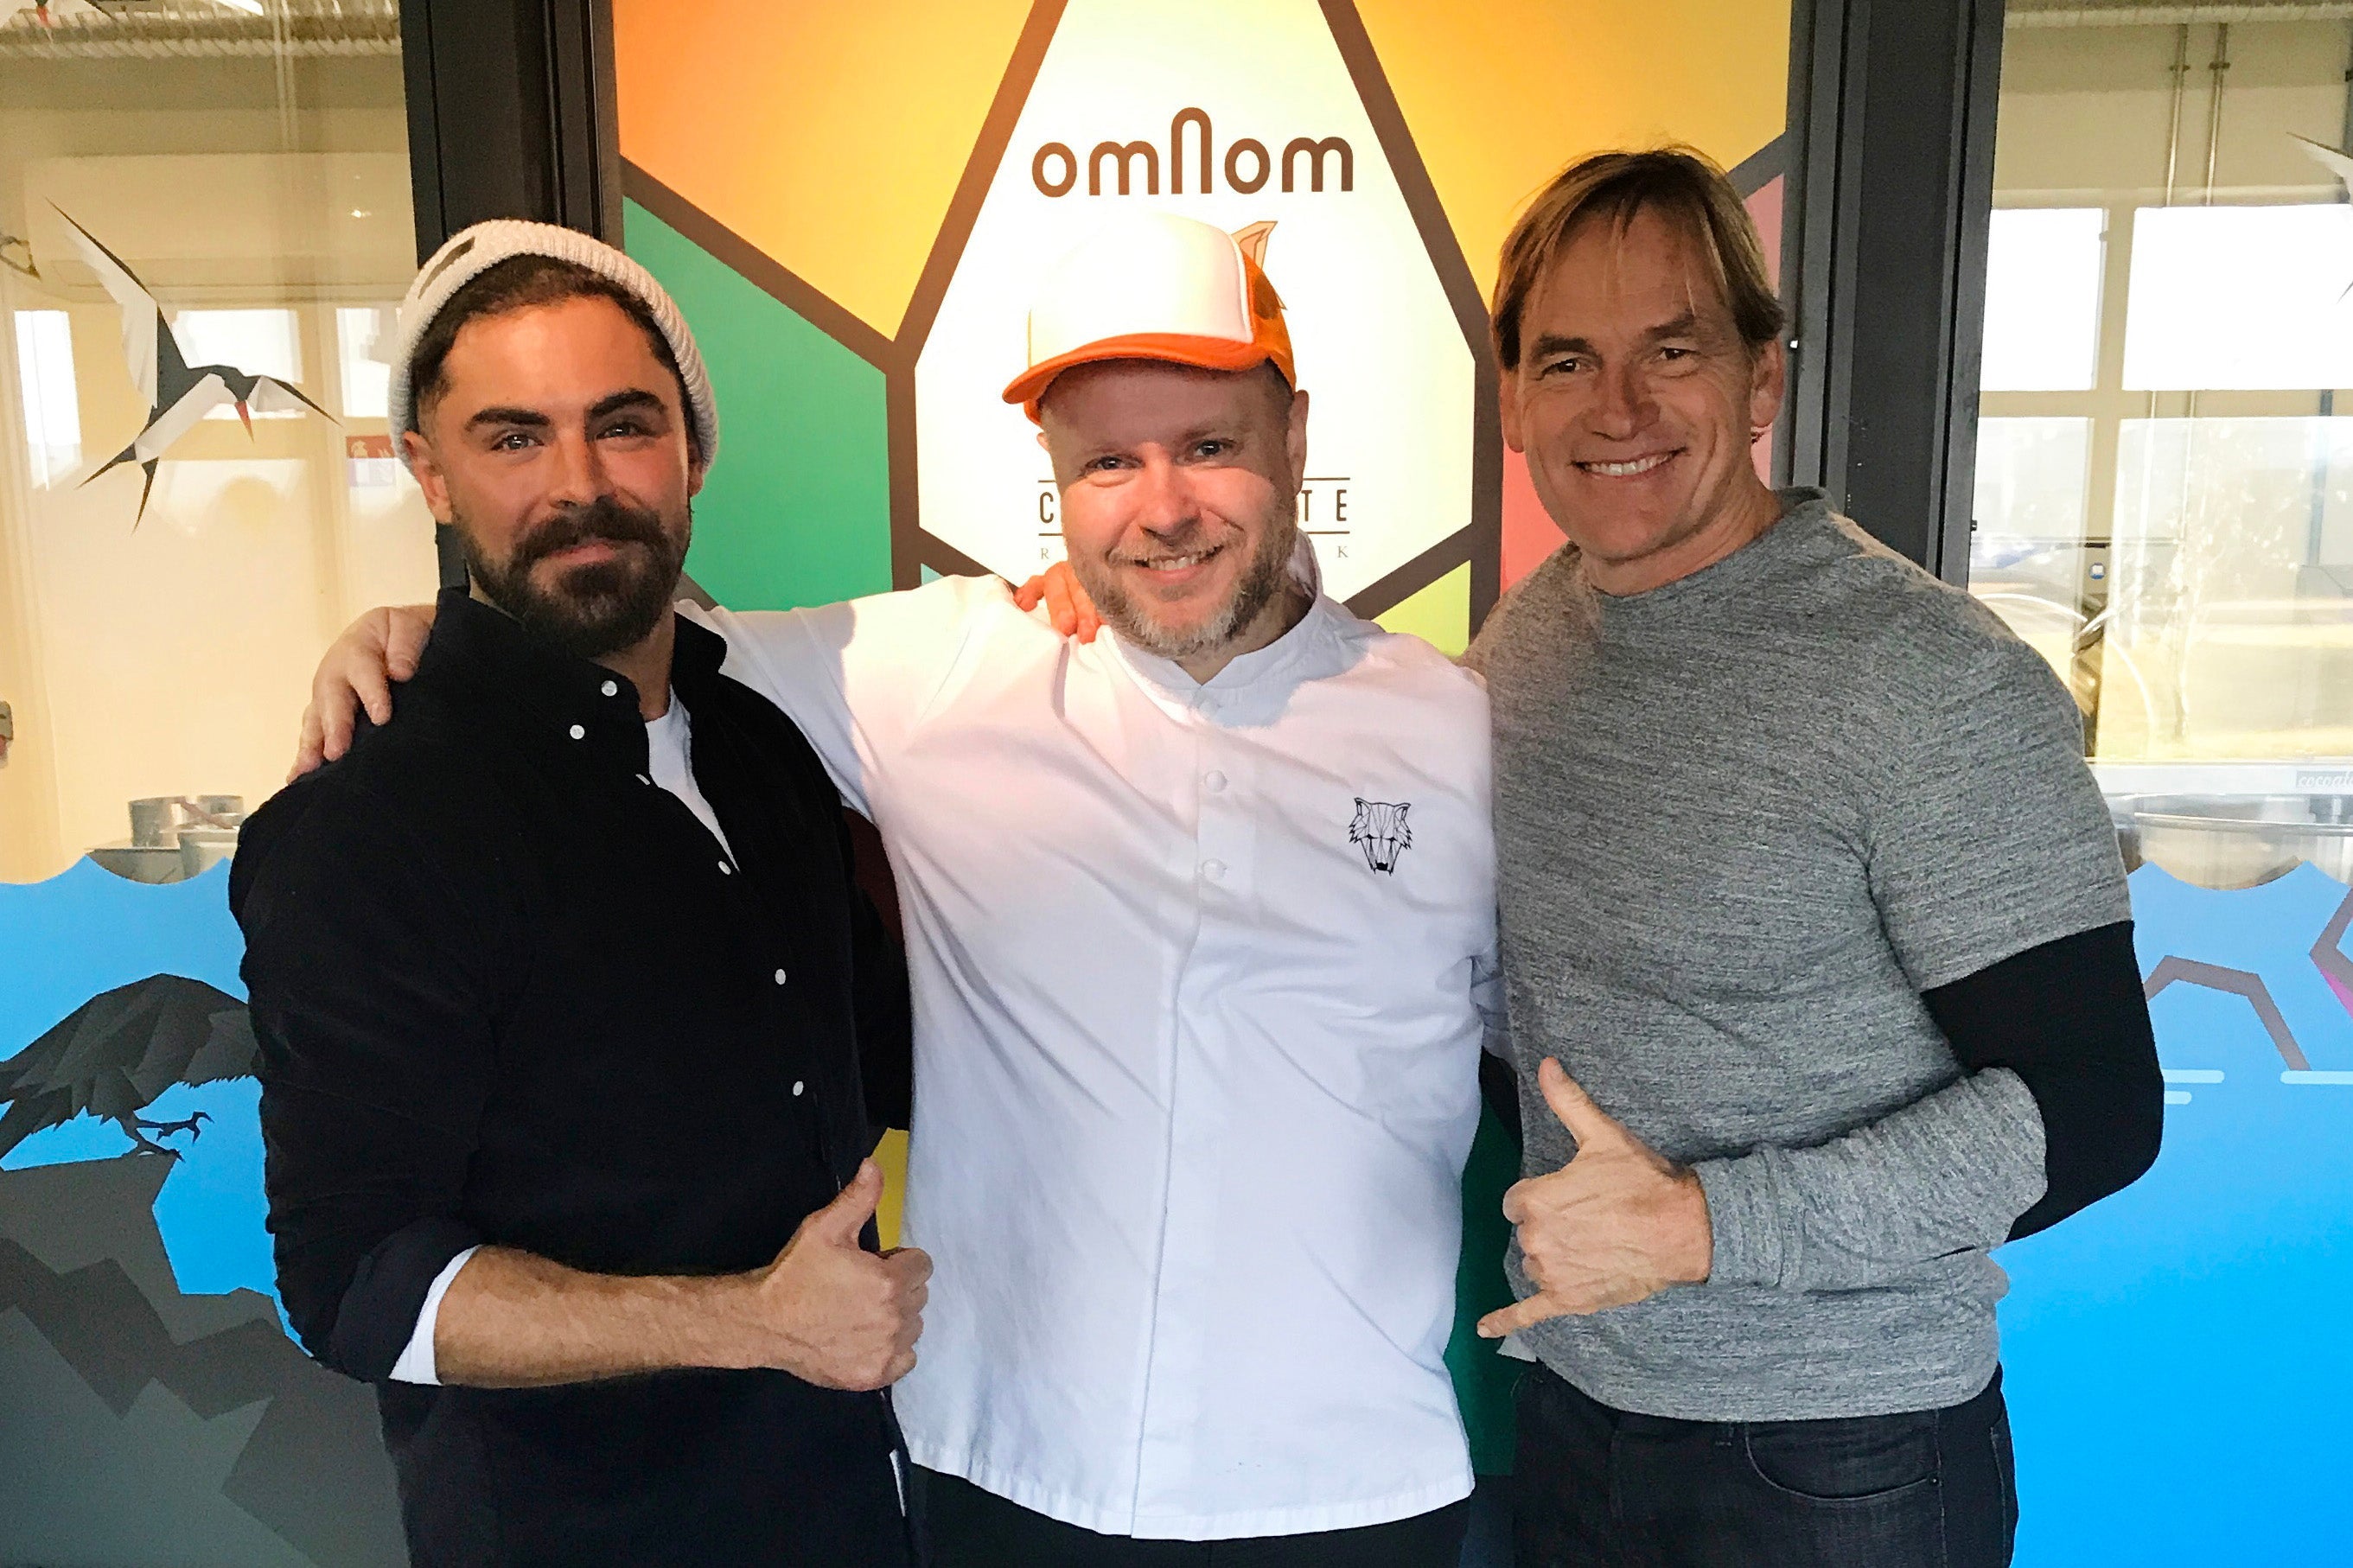 Zac Efron explore Iceland and visits Omnom Chocolate